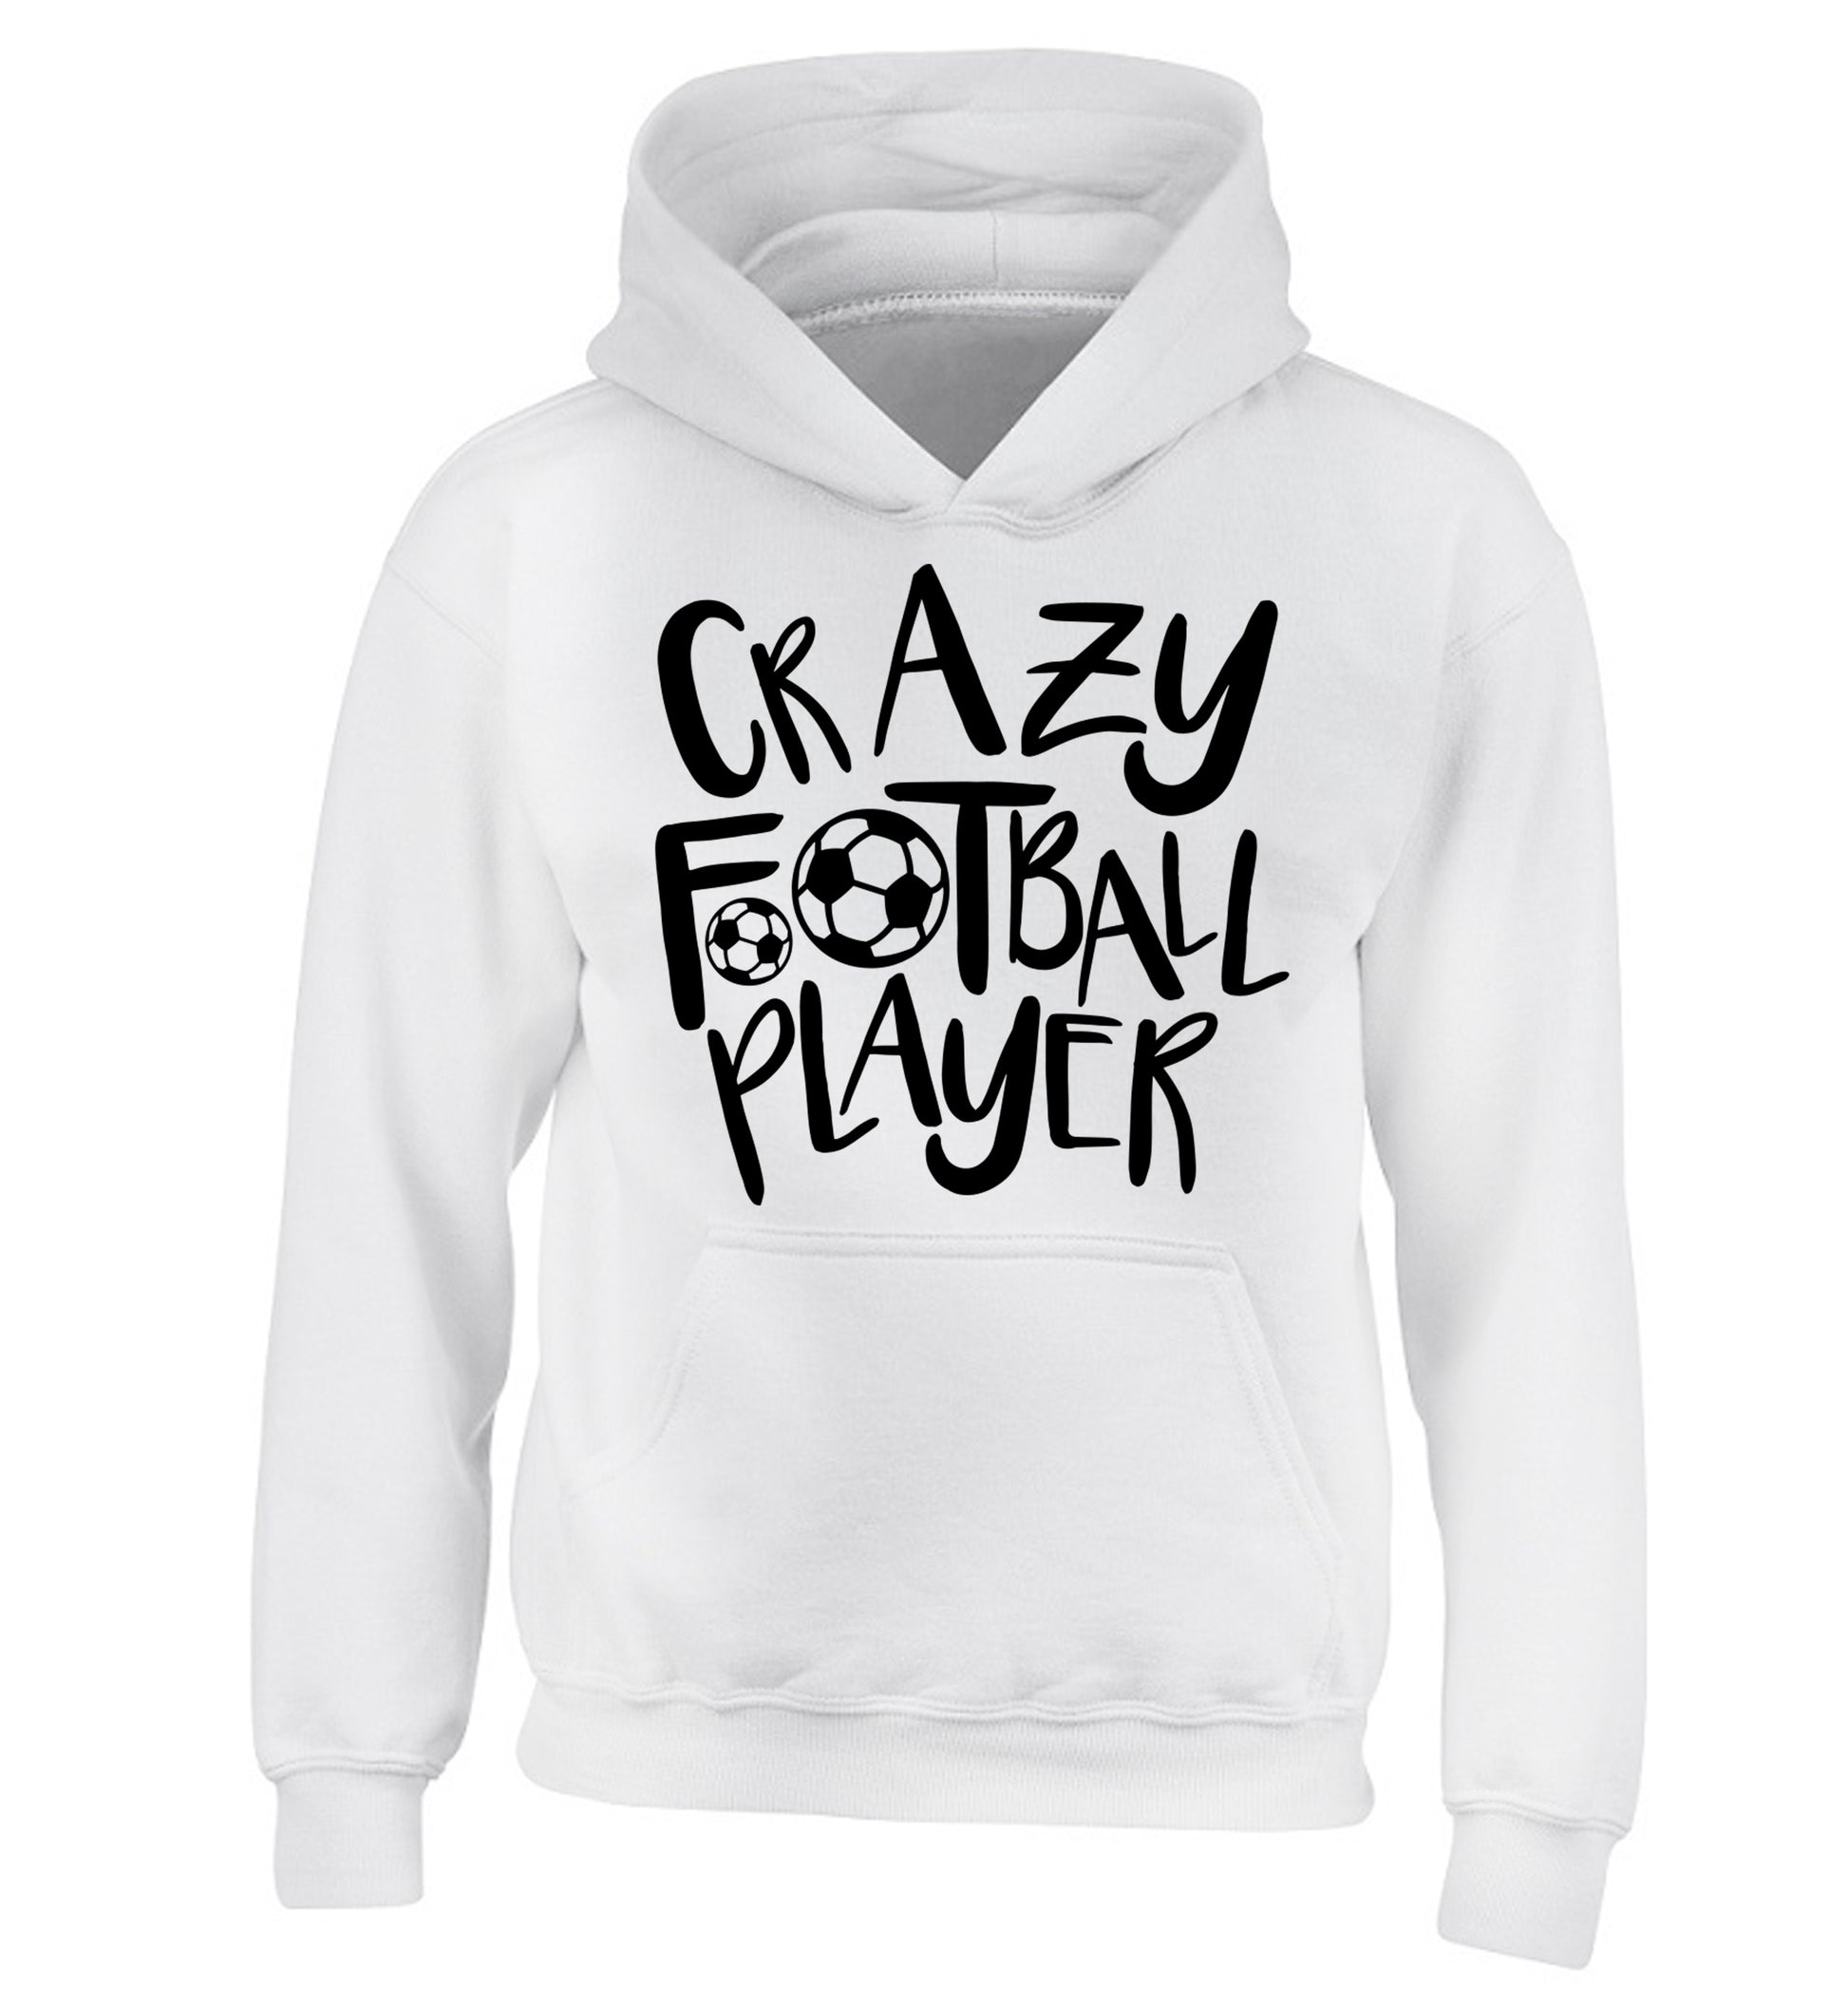 Crazy football player children's white hoodie 12-14 Years